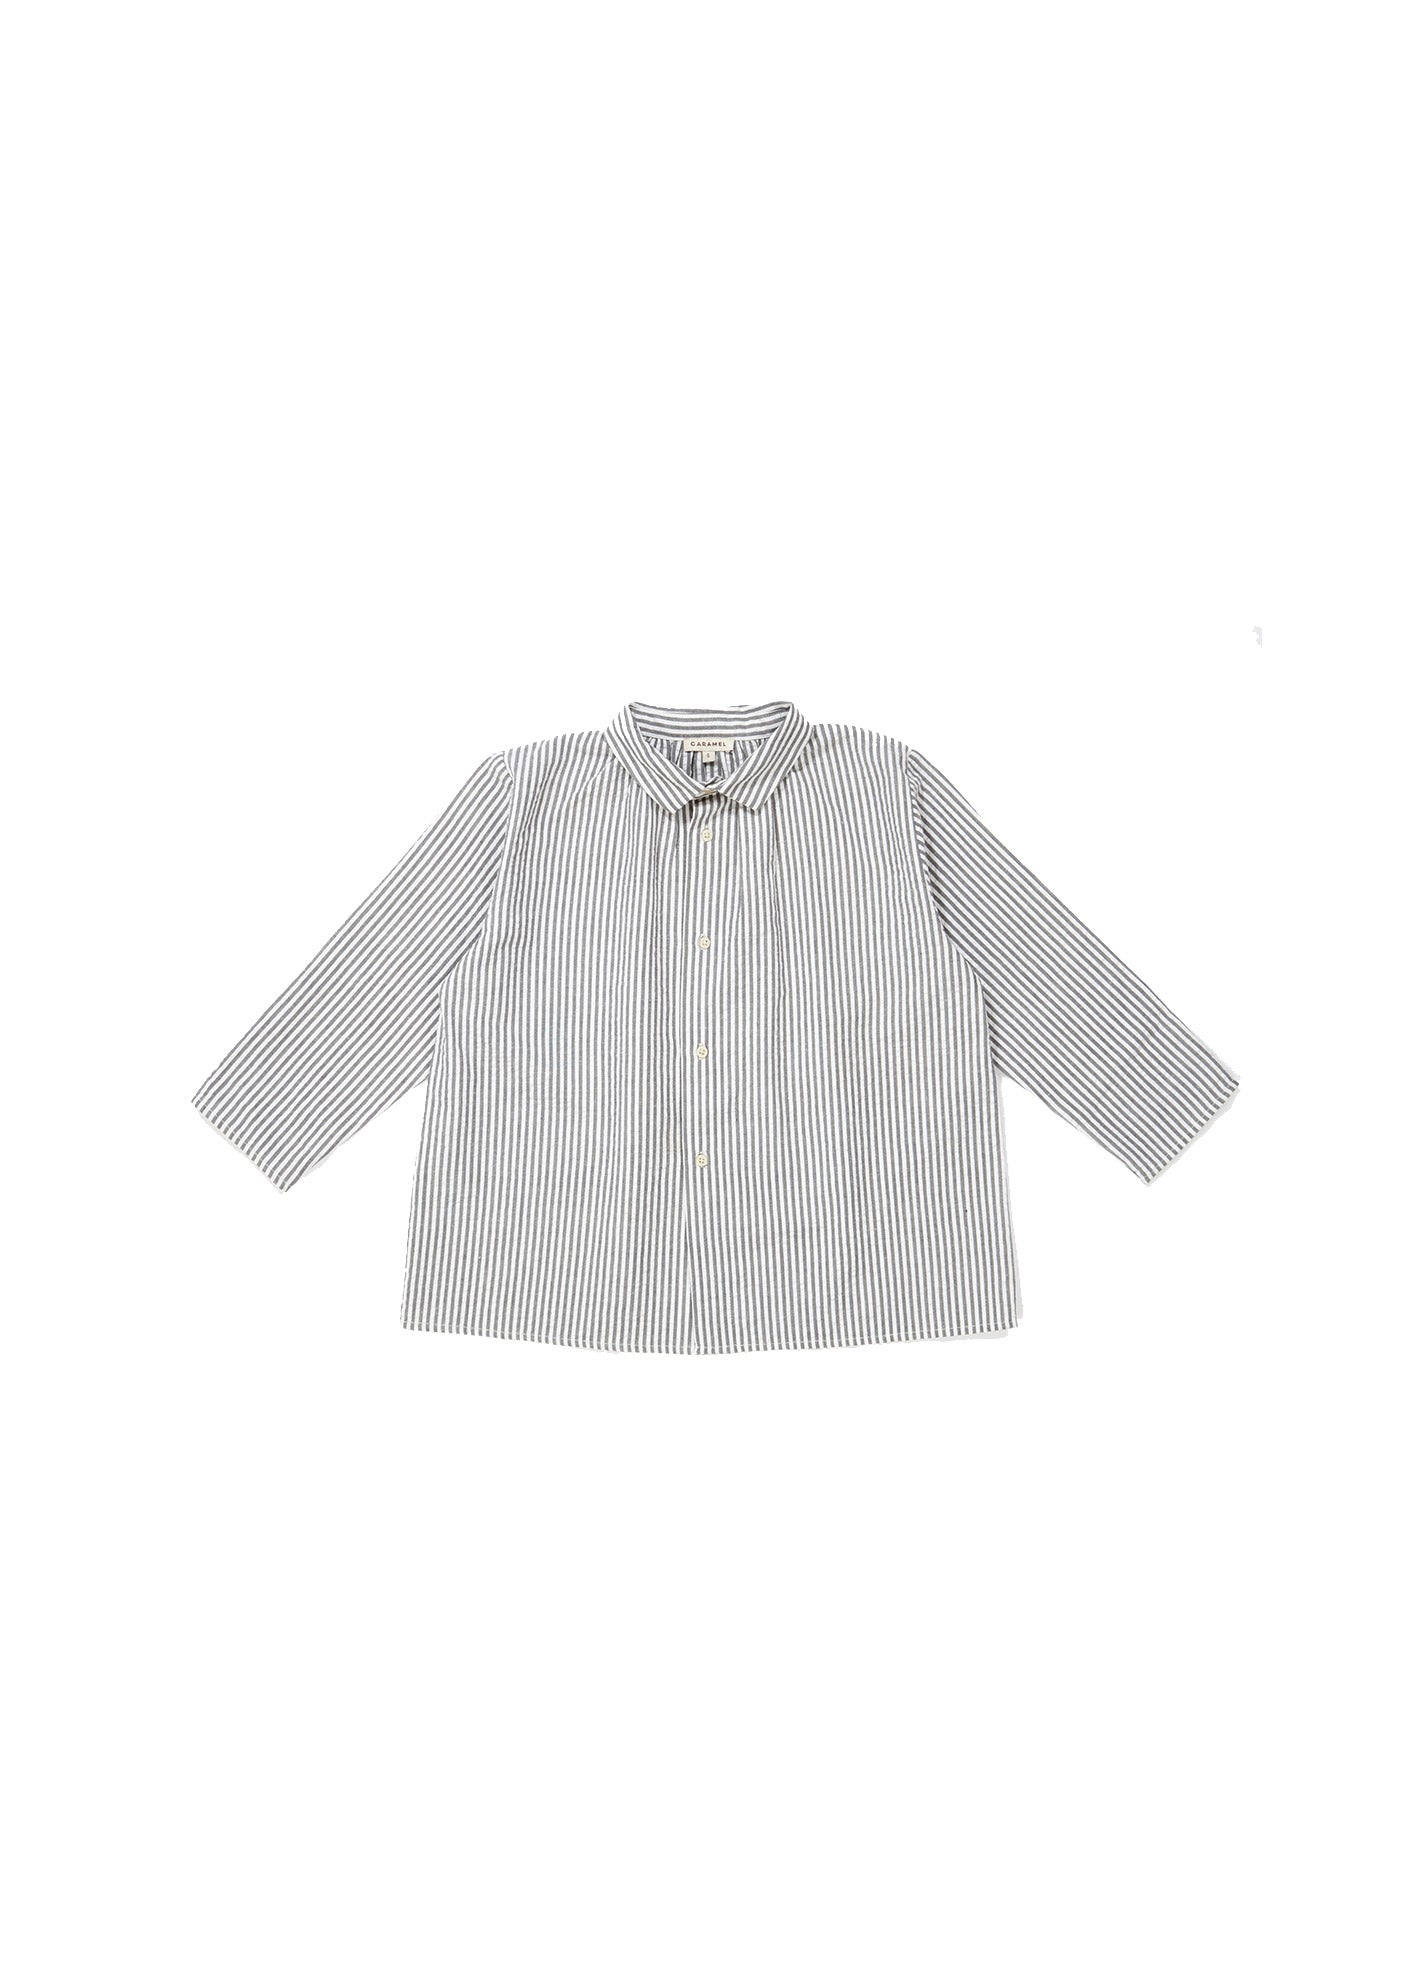 Boys Light Grey Striped Cotton Shirt